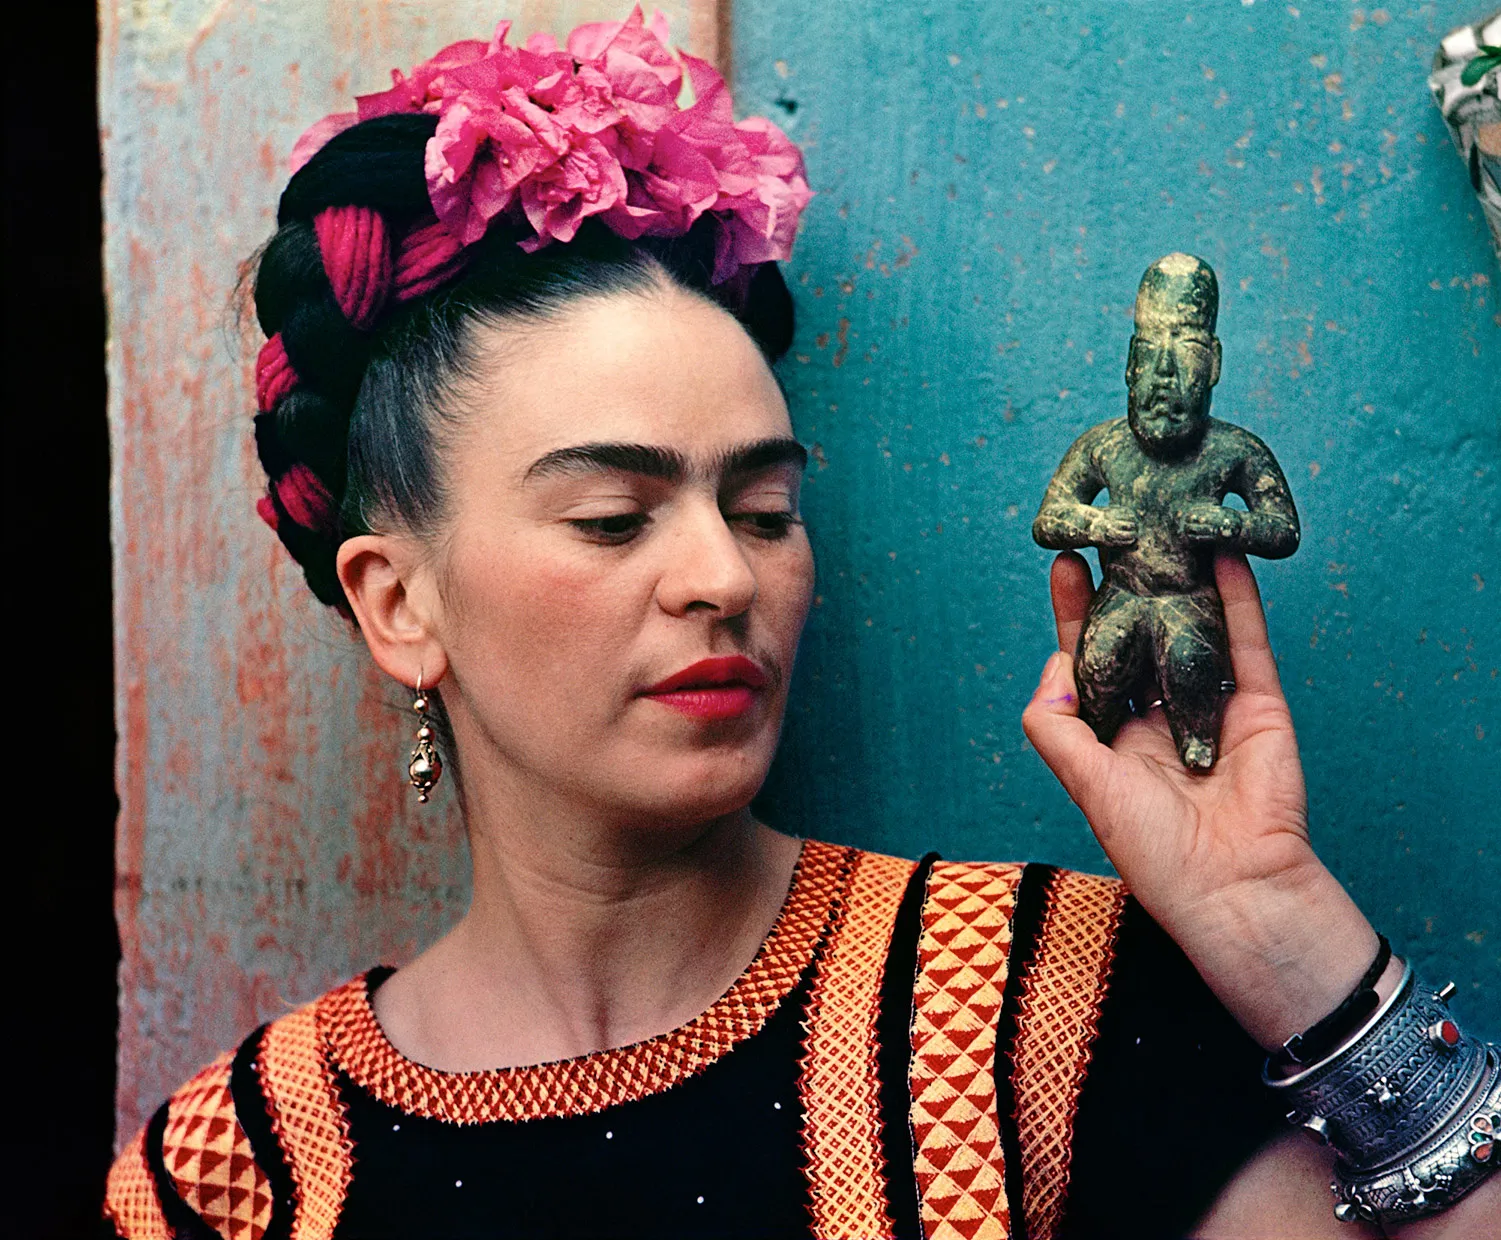 La pintora mexicana Frida Khalo